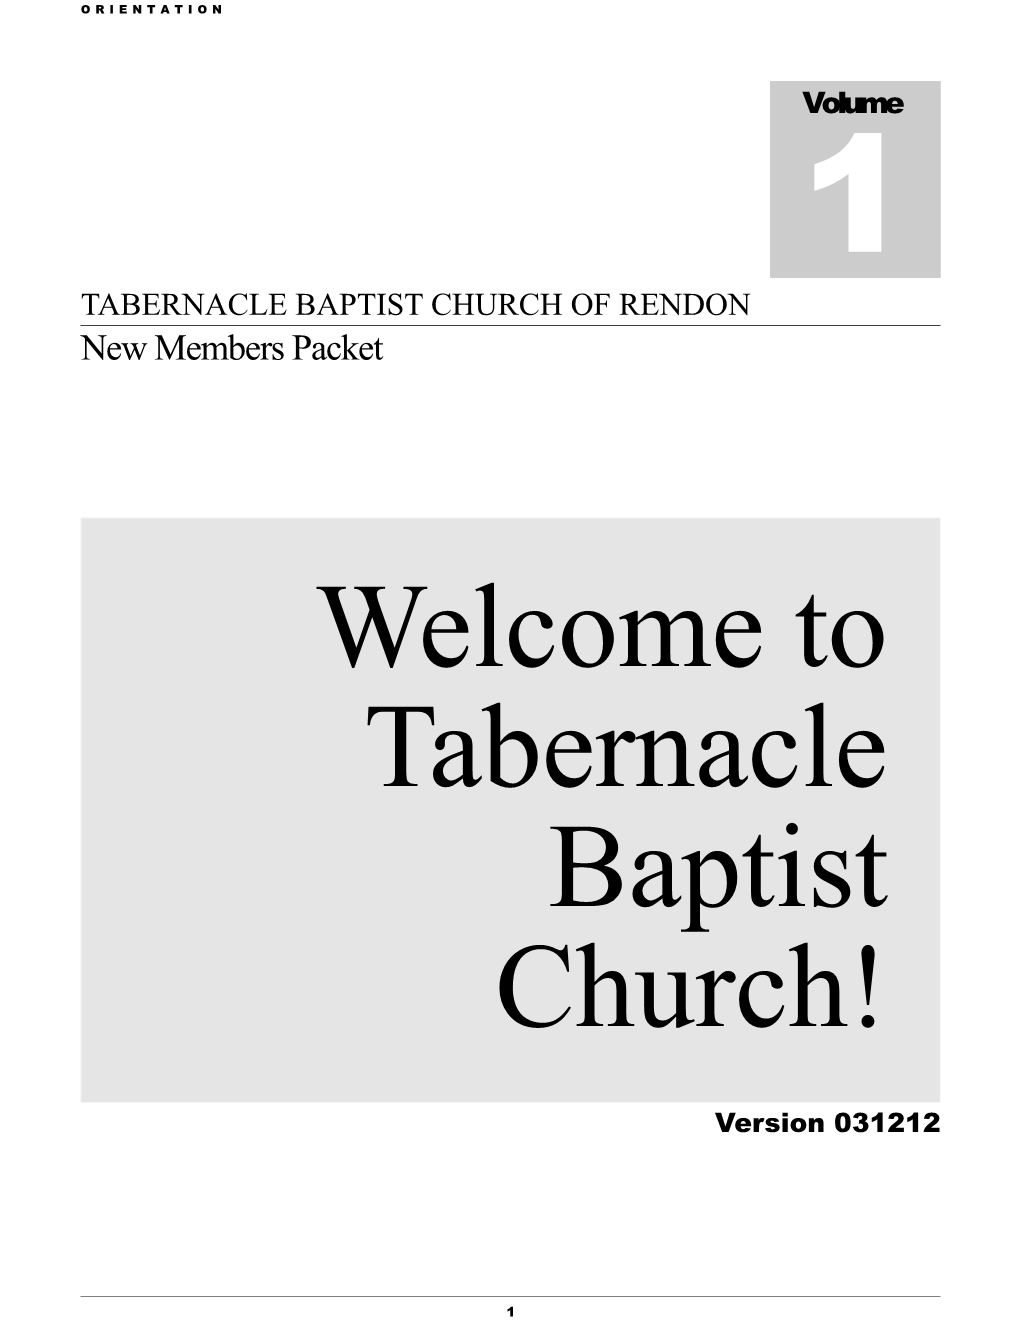 Tabernaclebaptistchurch of Rendon